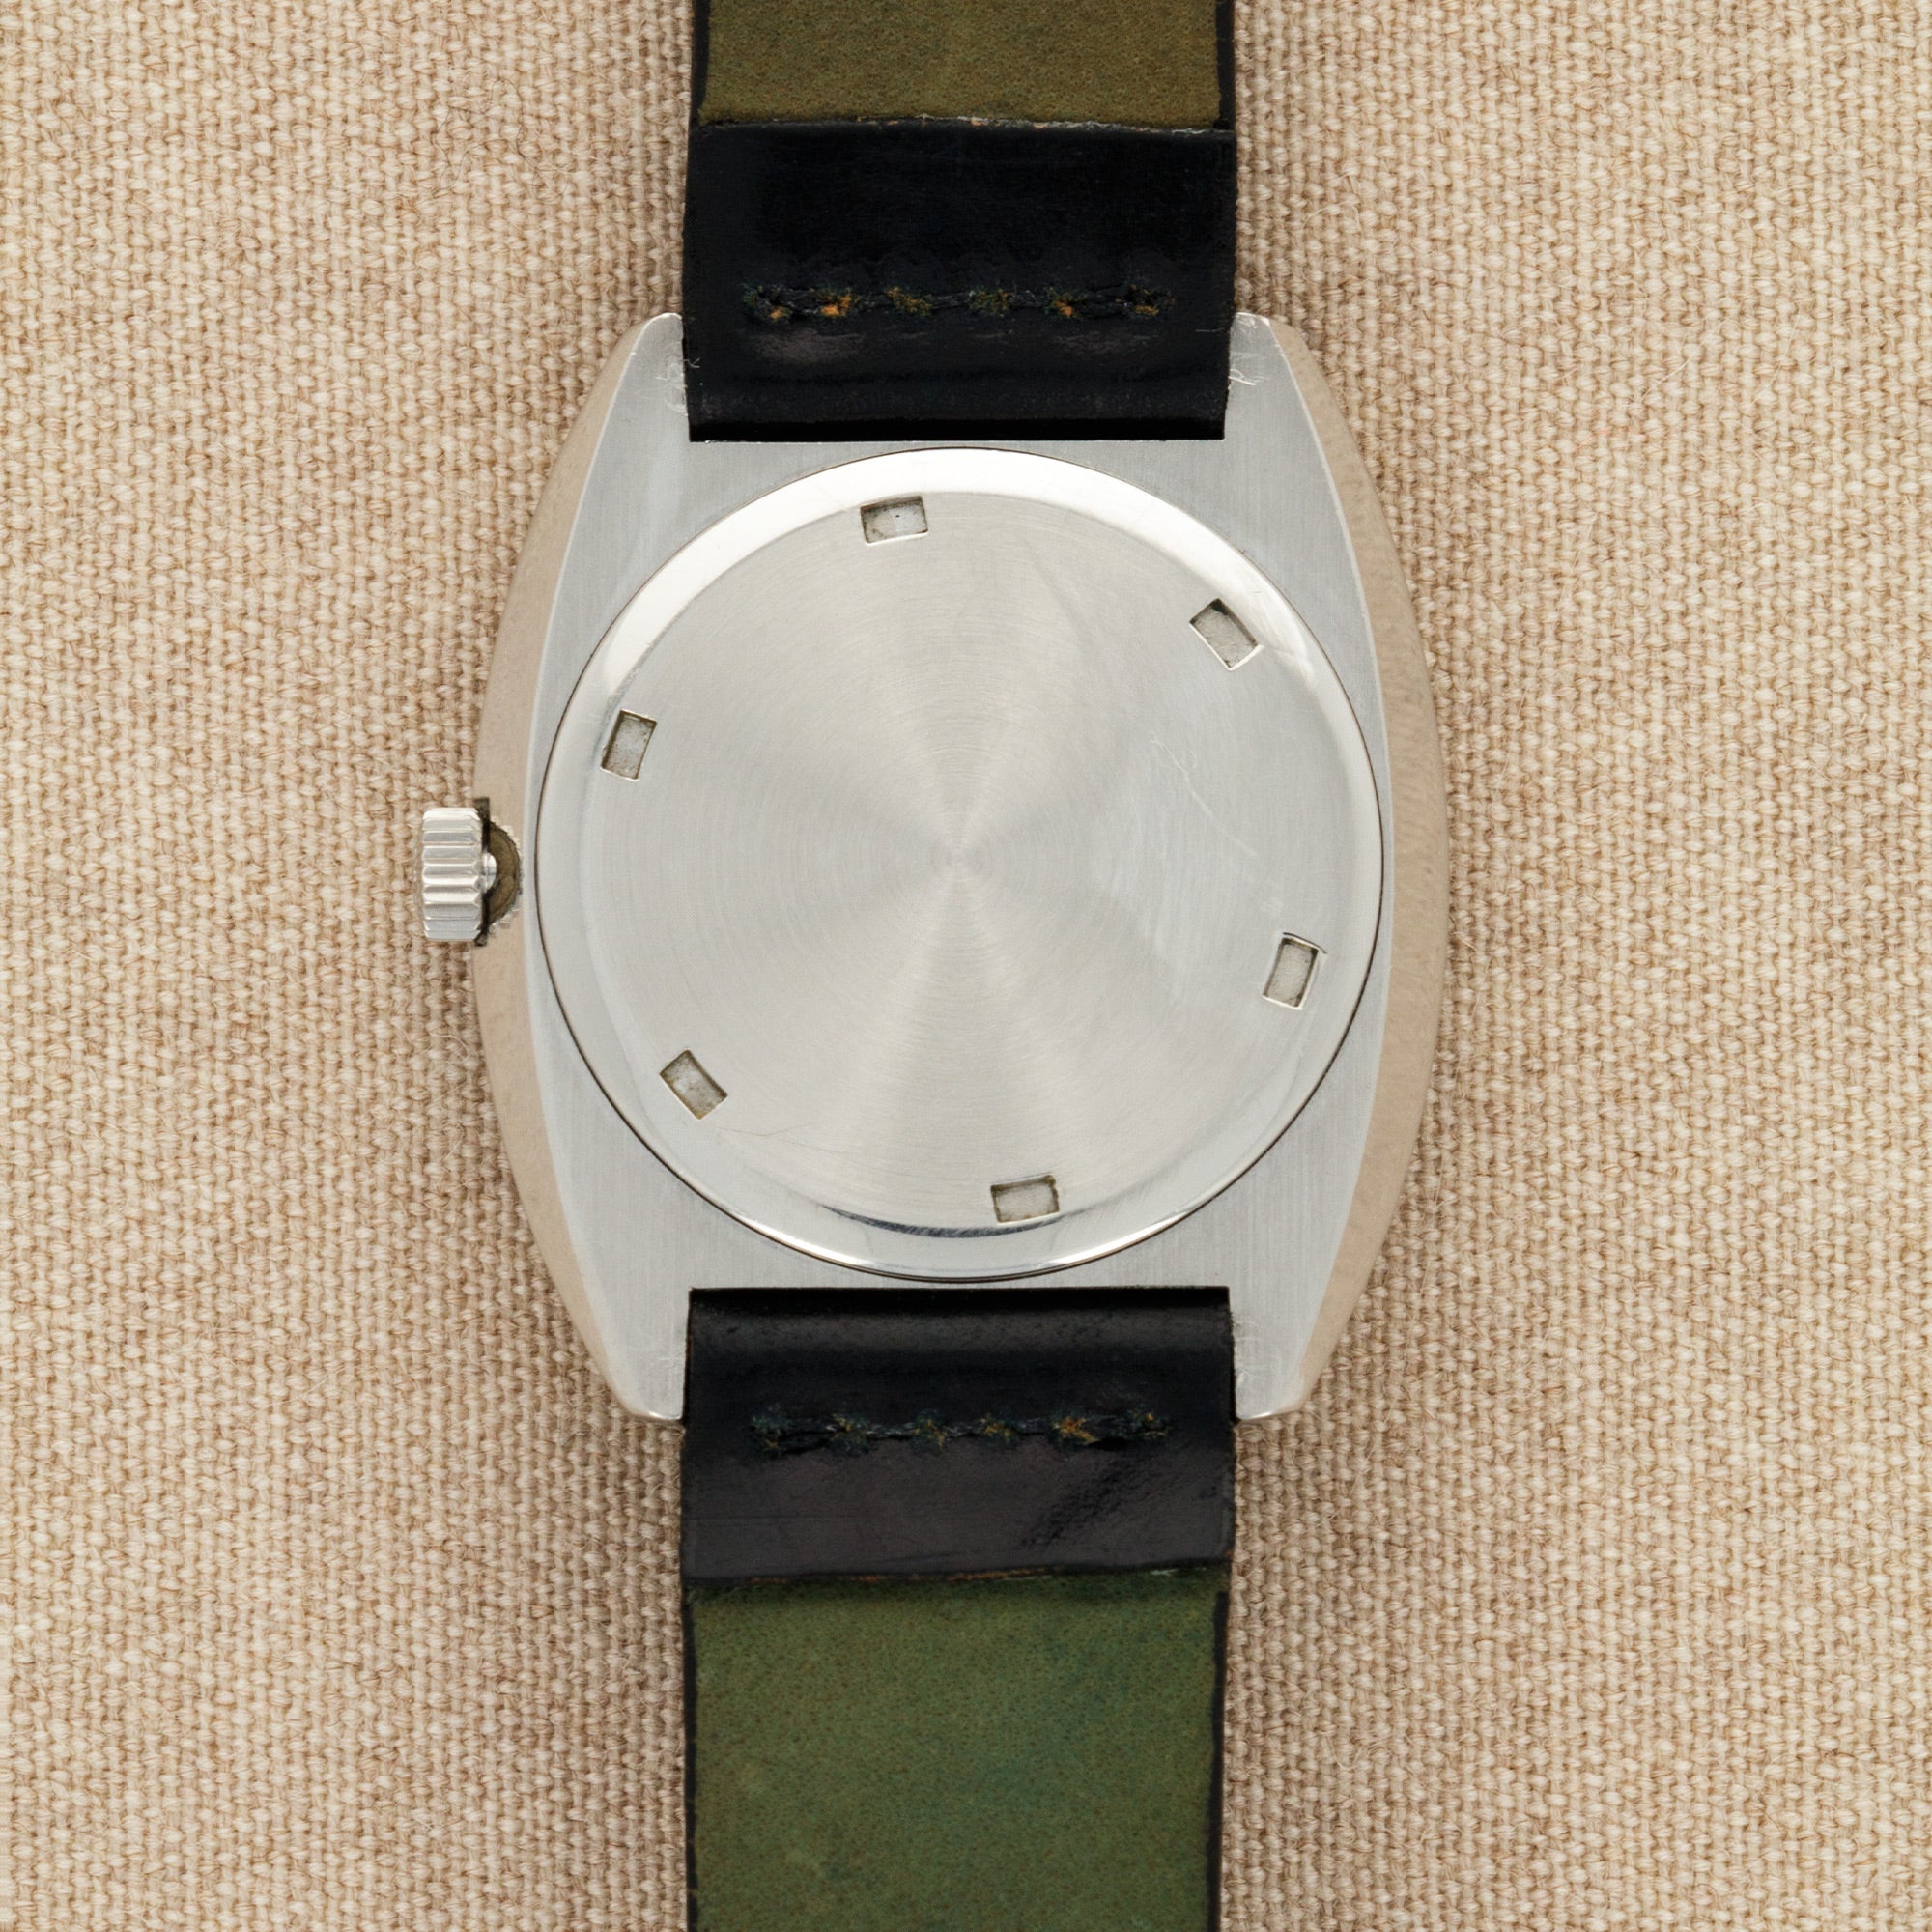 Patek Philippe - Patek Philippe Steel Tonneau Ref. 3579 with Original Papers - The Keystone Watches